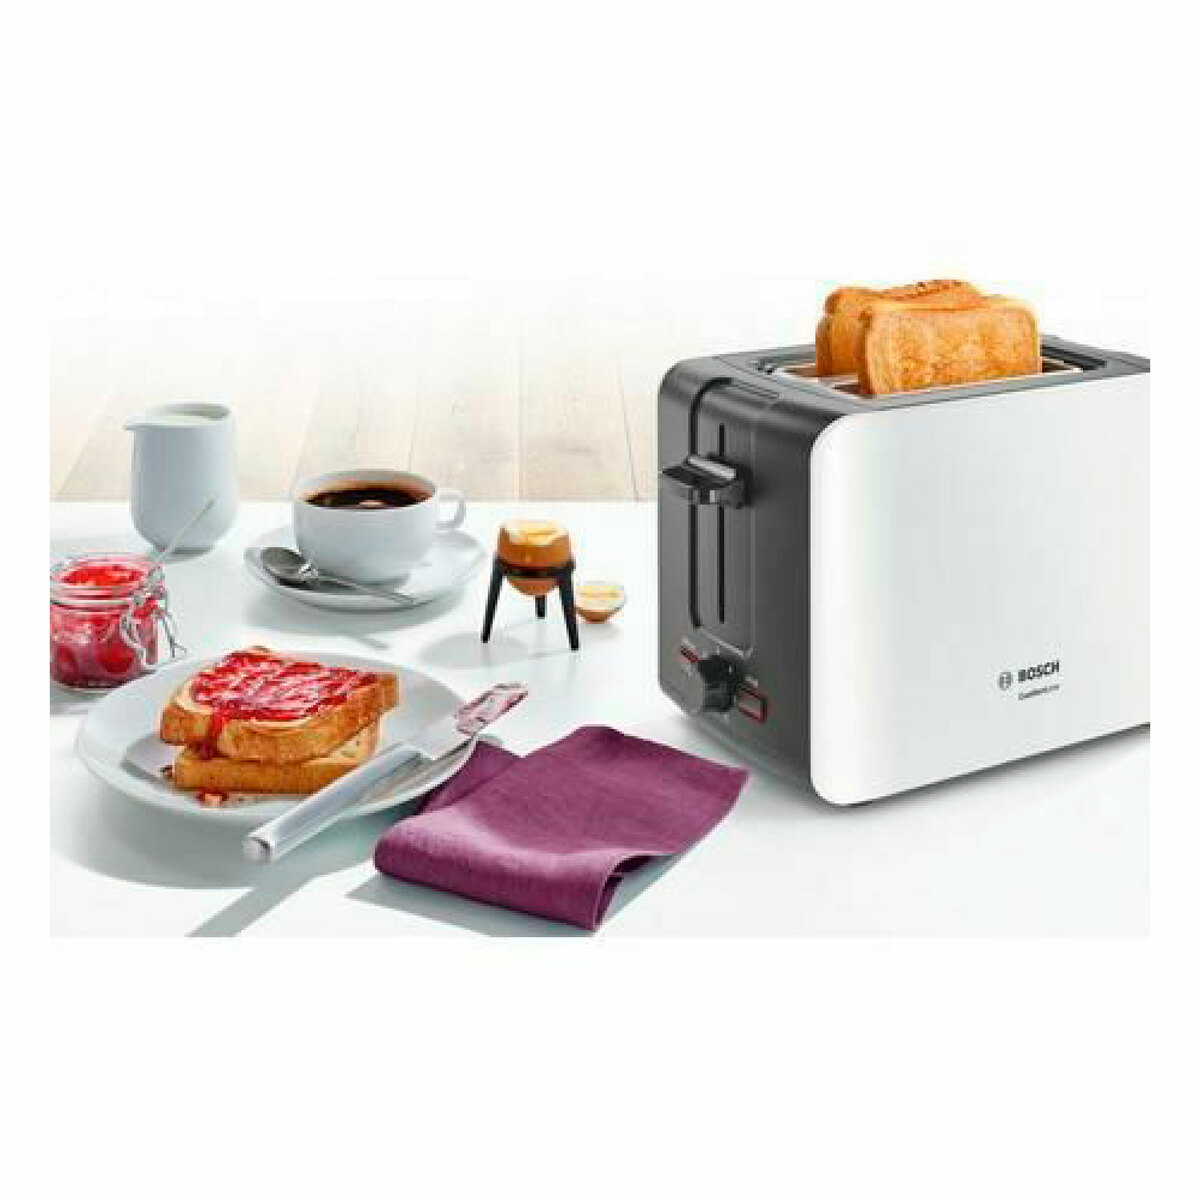 Bosch TAT6A111G 2 Slice Toaster